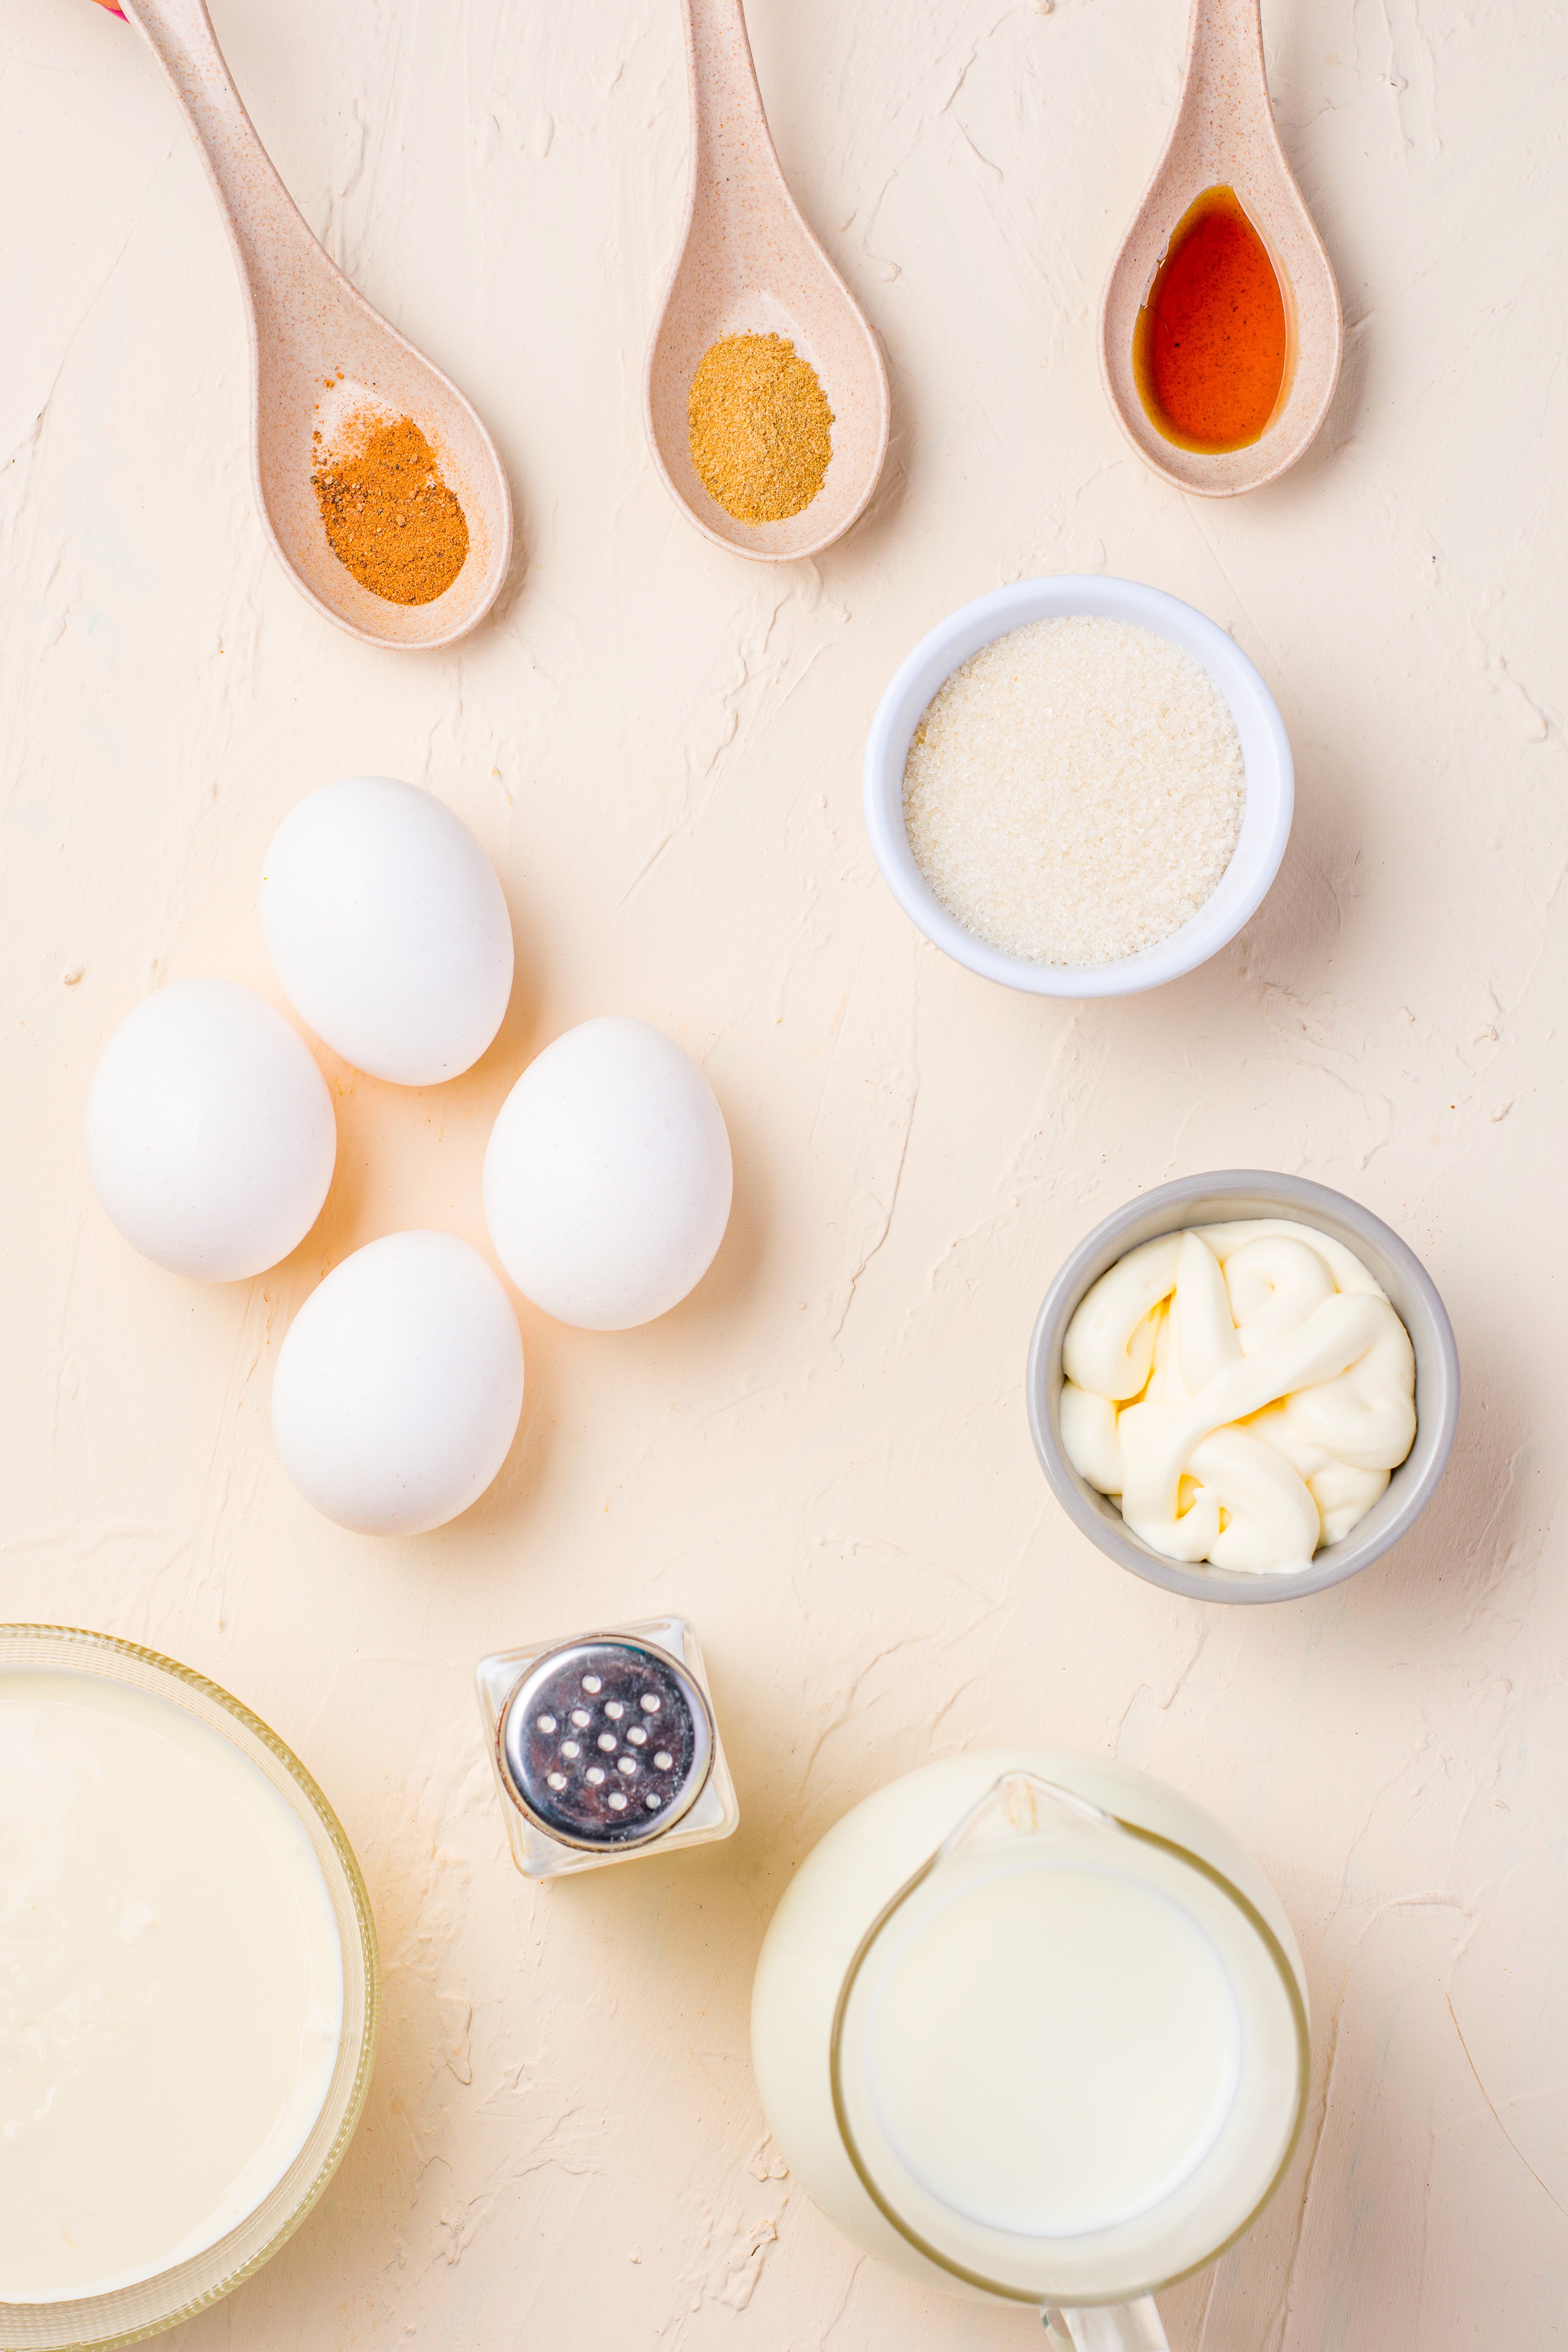 Measured ingredients need to make egg nog in bowls.